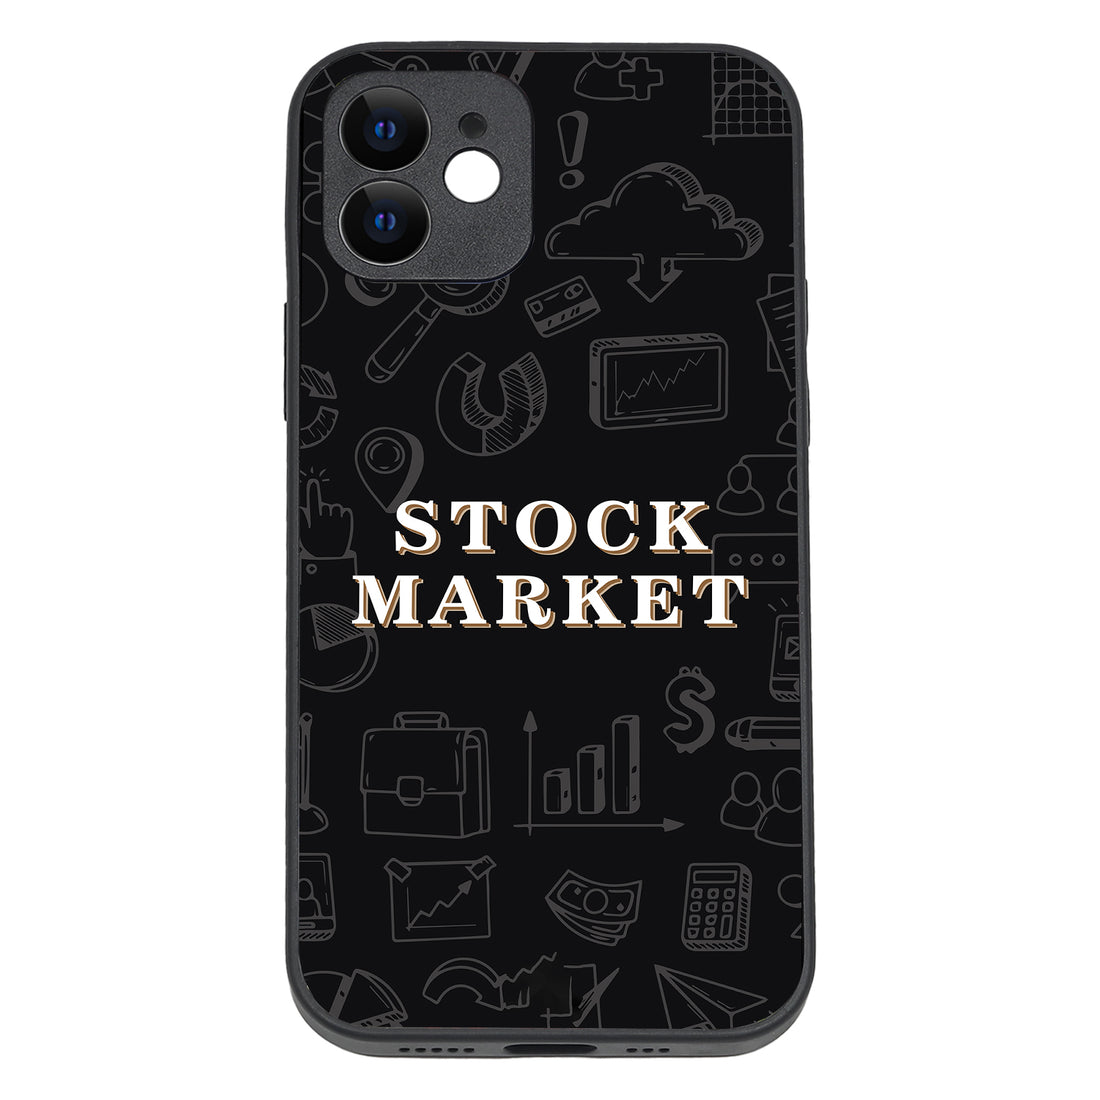 Stock Market Trading iPhone 12 Case